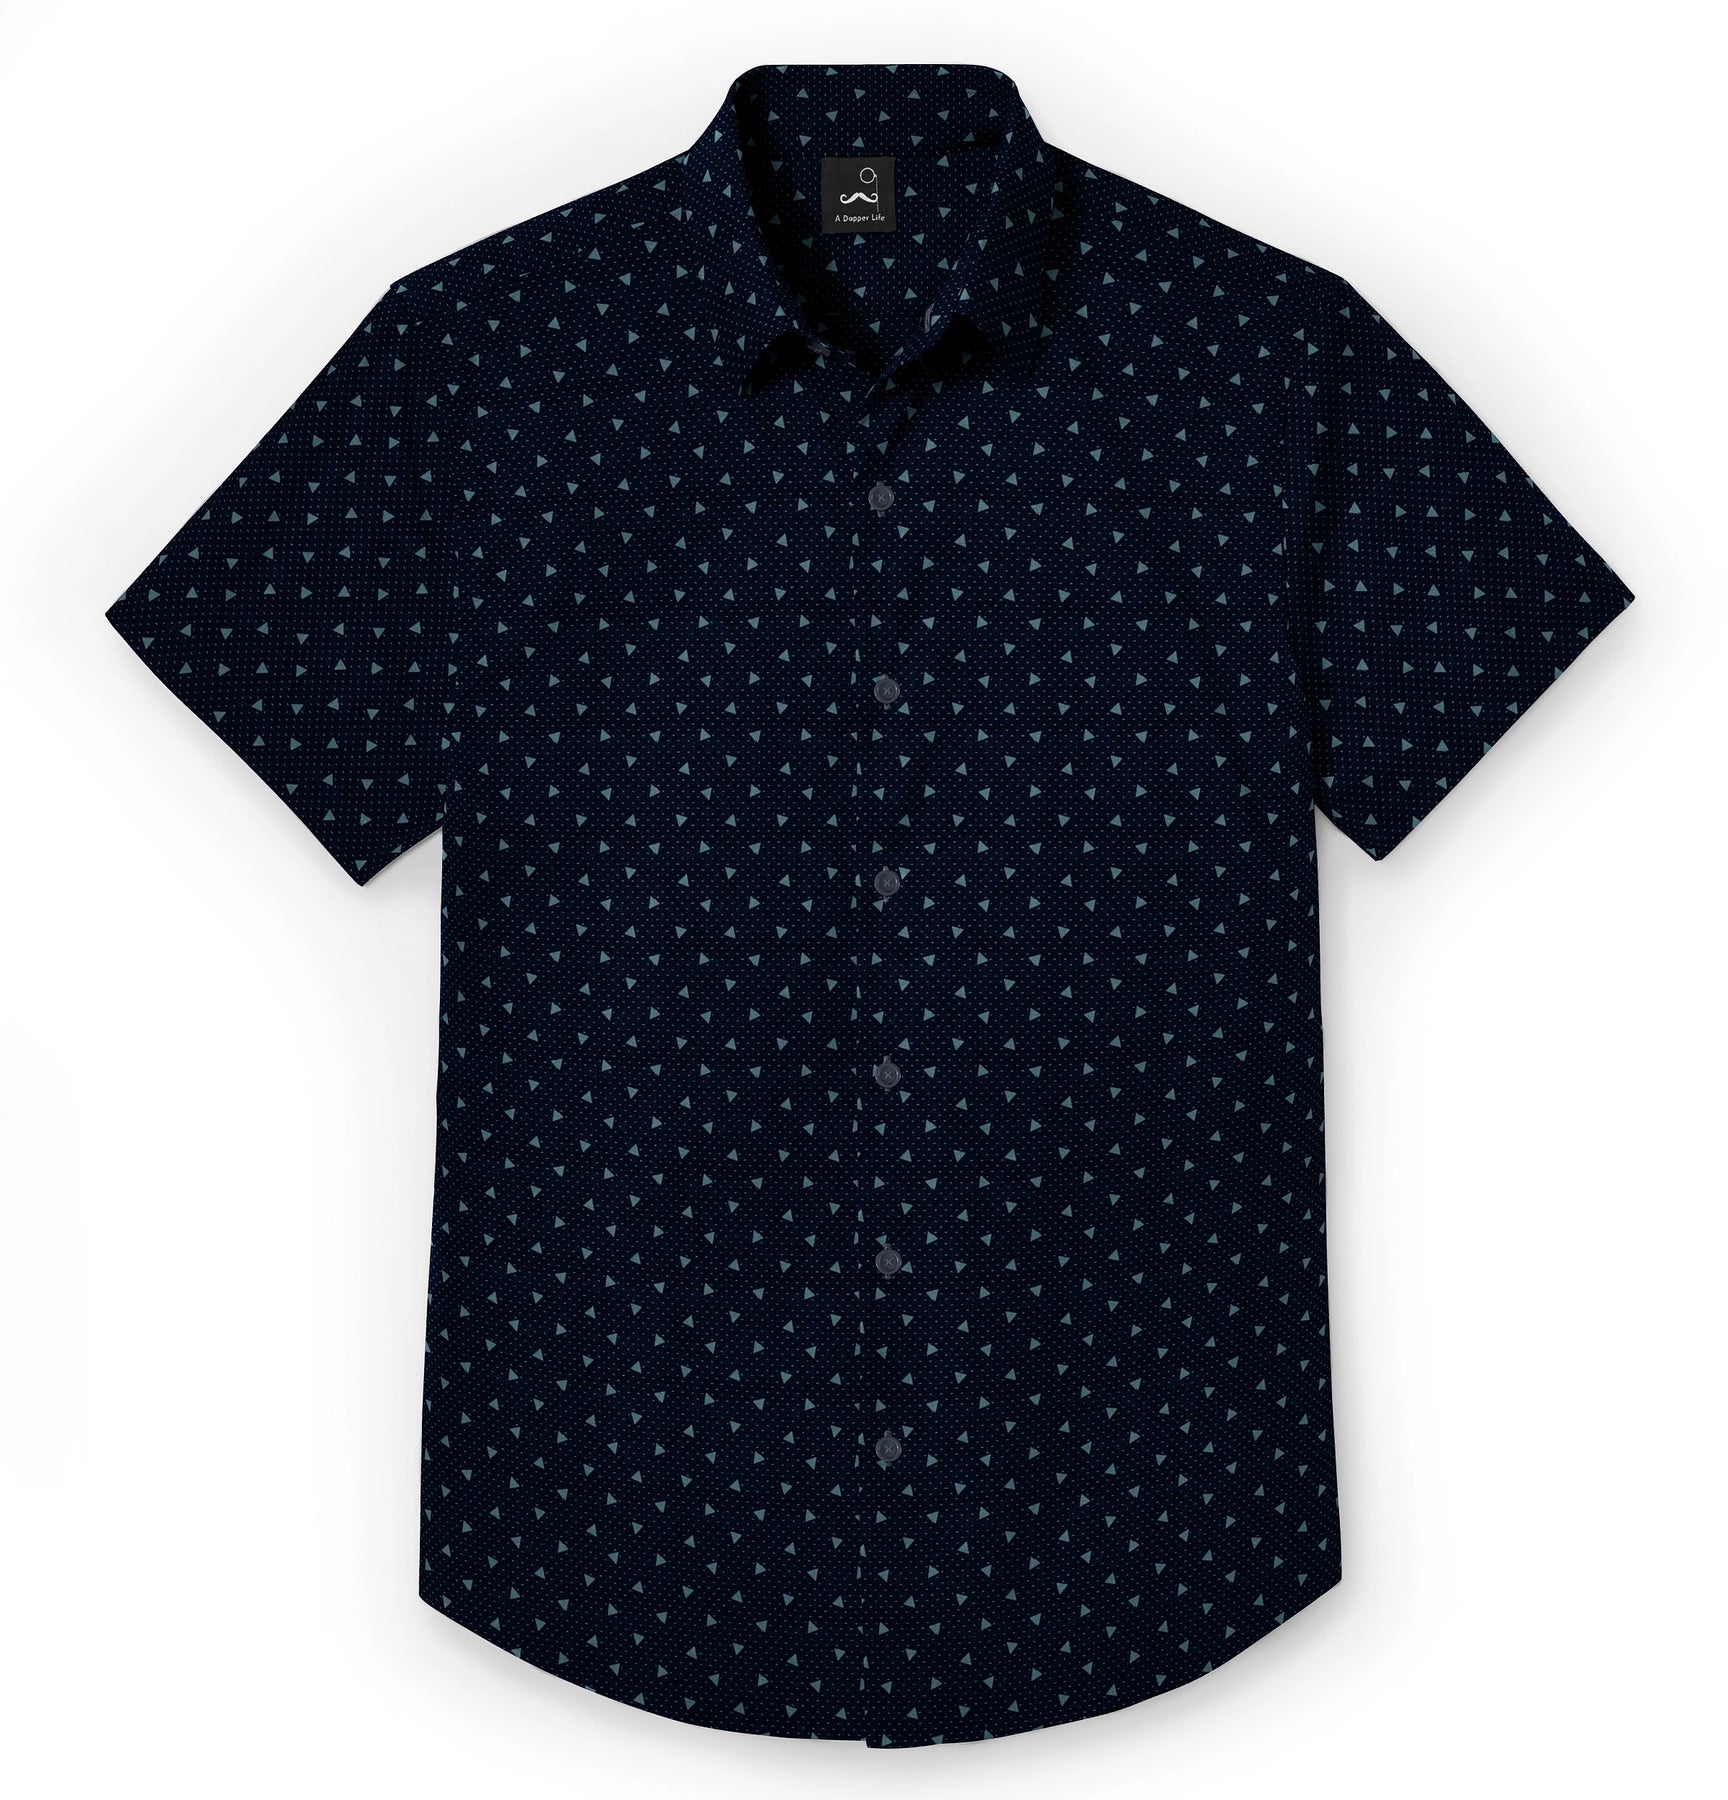 Batch Shirts Men's Short Sleeve Casual Button Down Shirt in Jet Black Stretch Cotton Medium - Tall